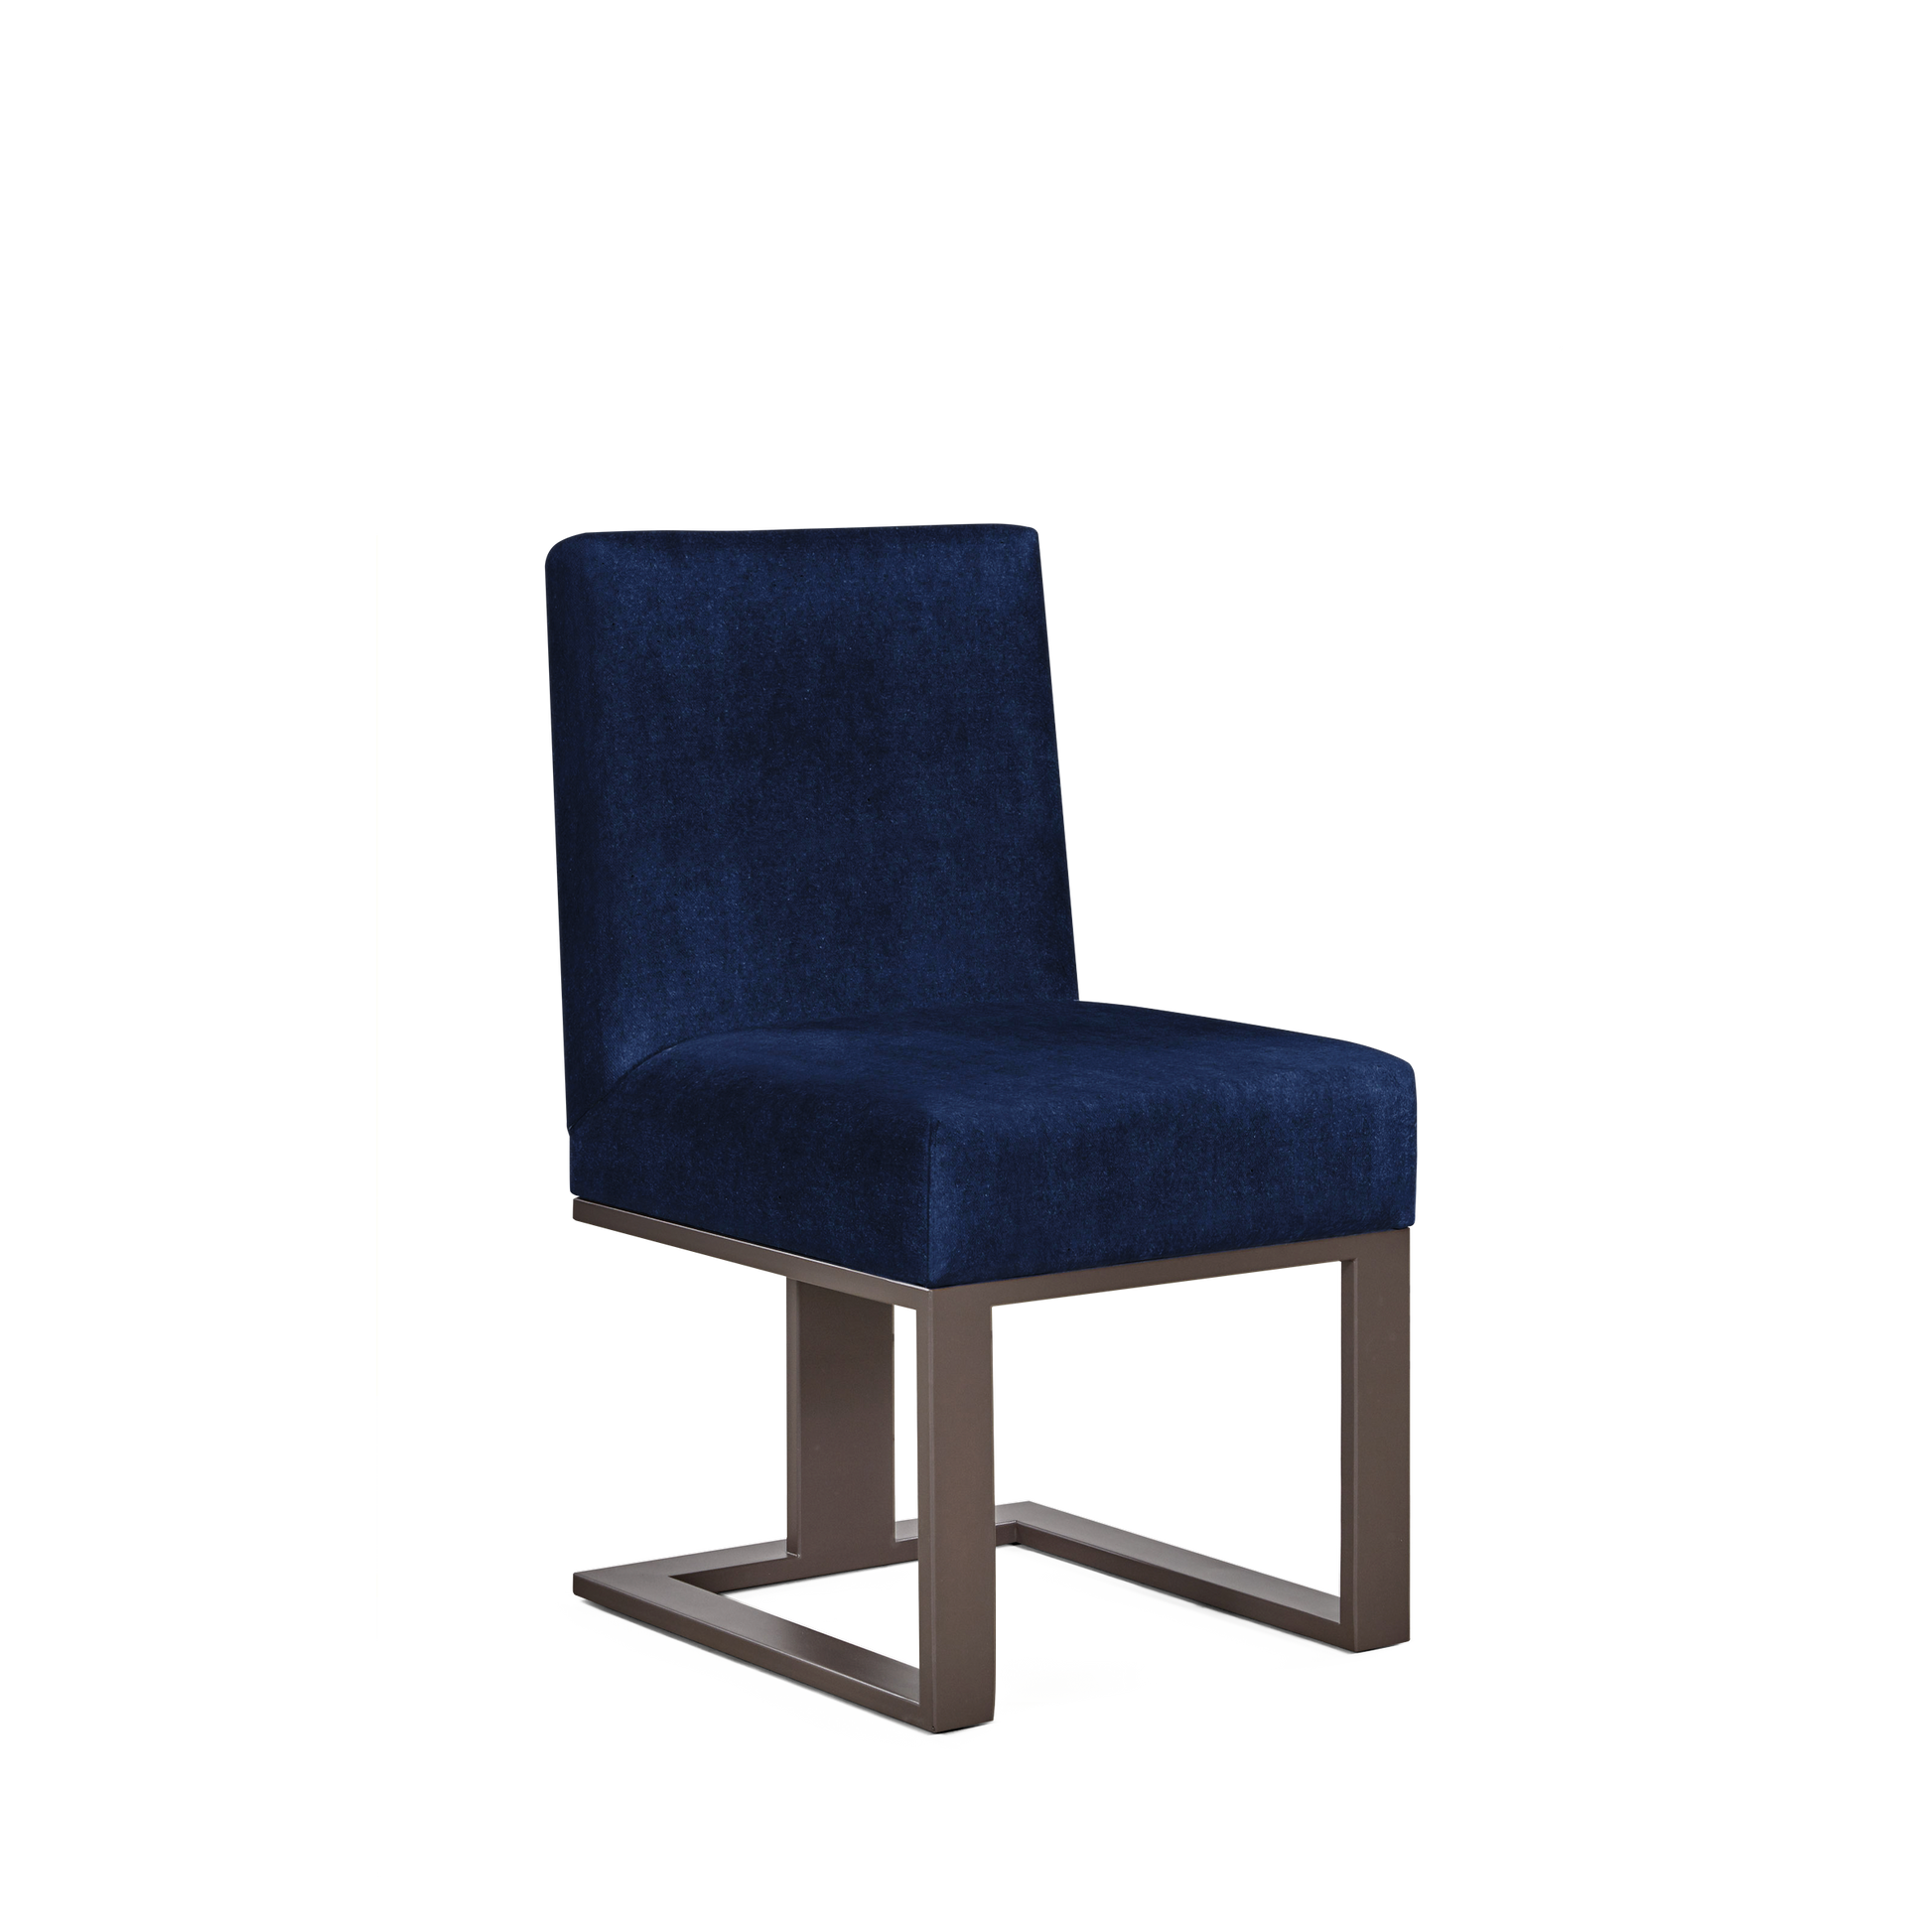 Len chair with London dark blue textile and moka wood legs 